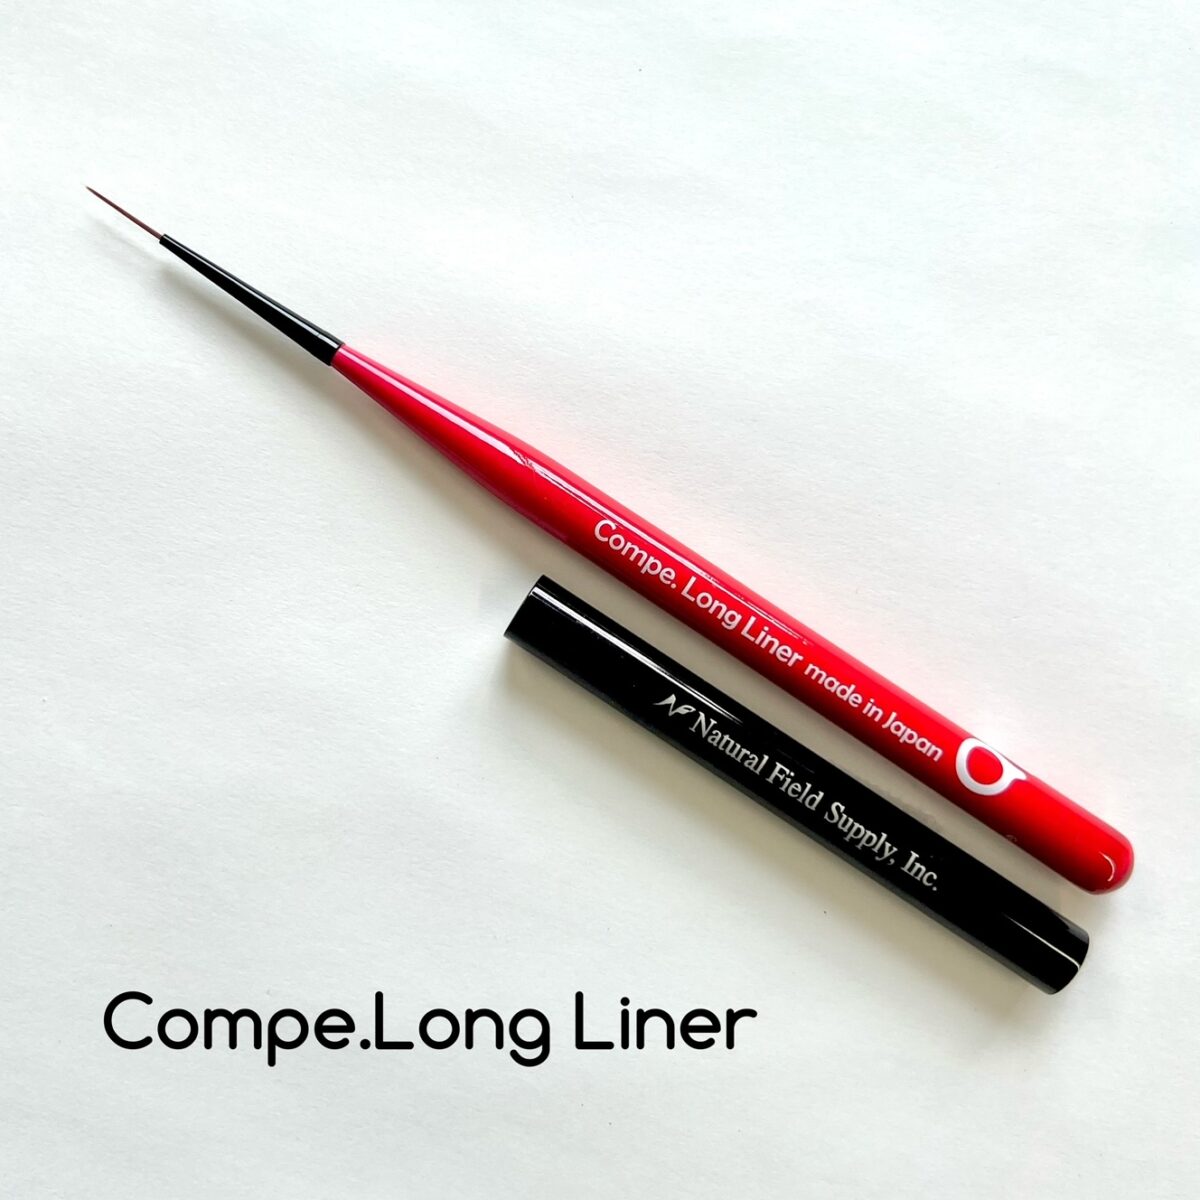 Compe.Long Liner